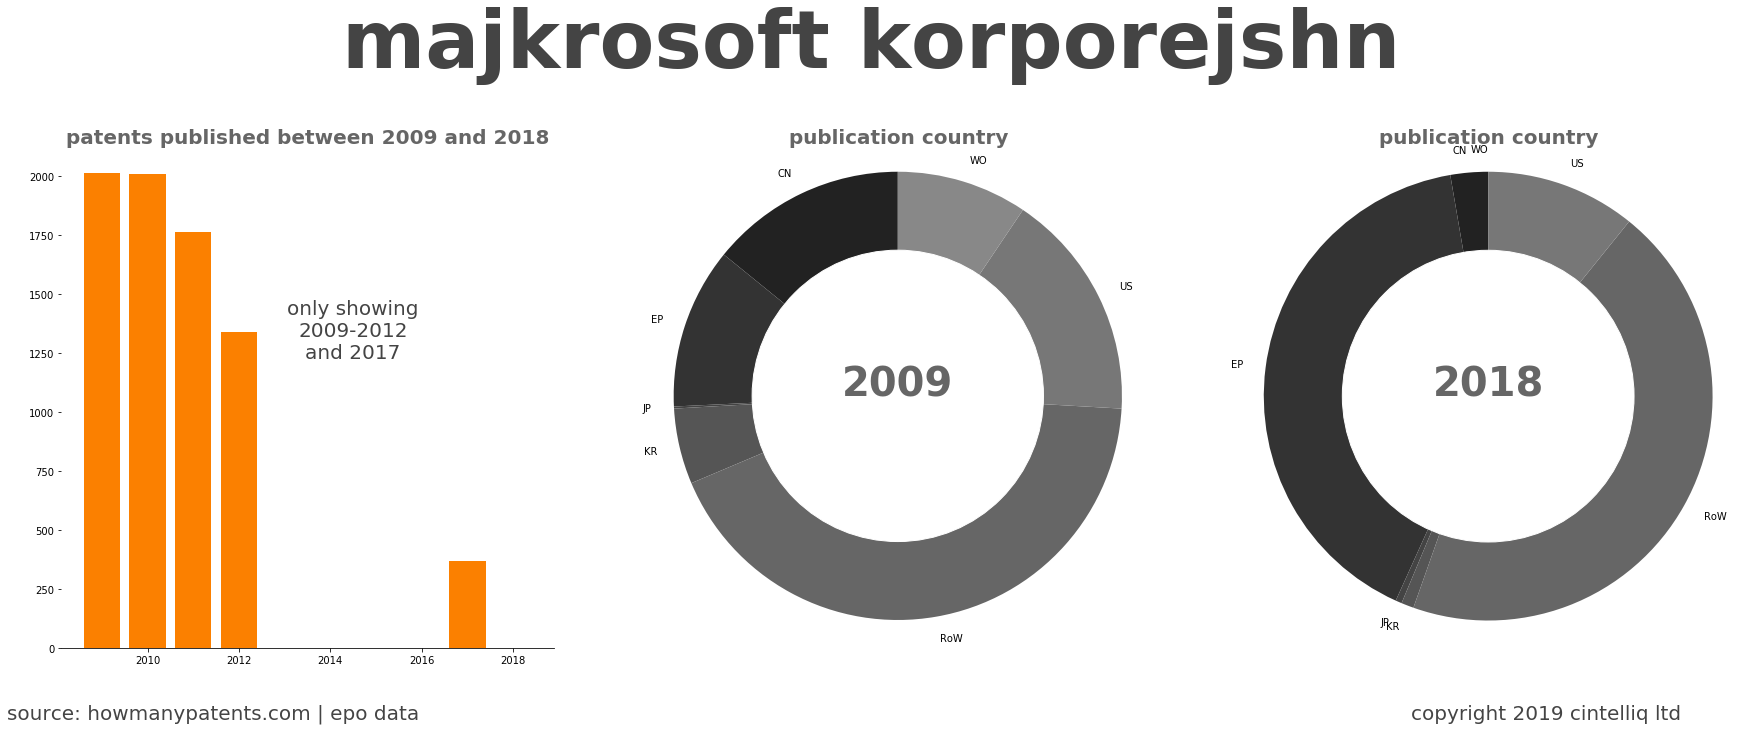 summary of patents for Majkrosoft Korporejshn